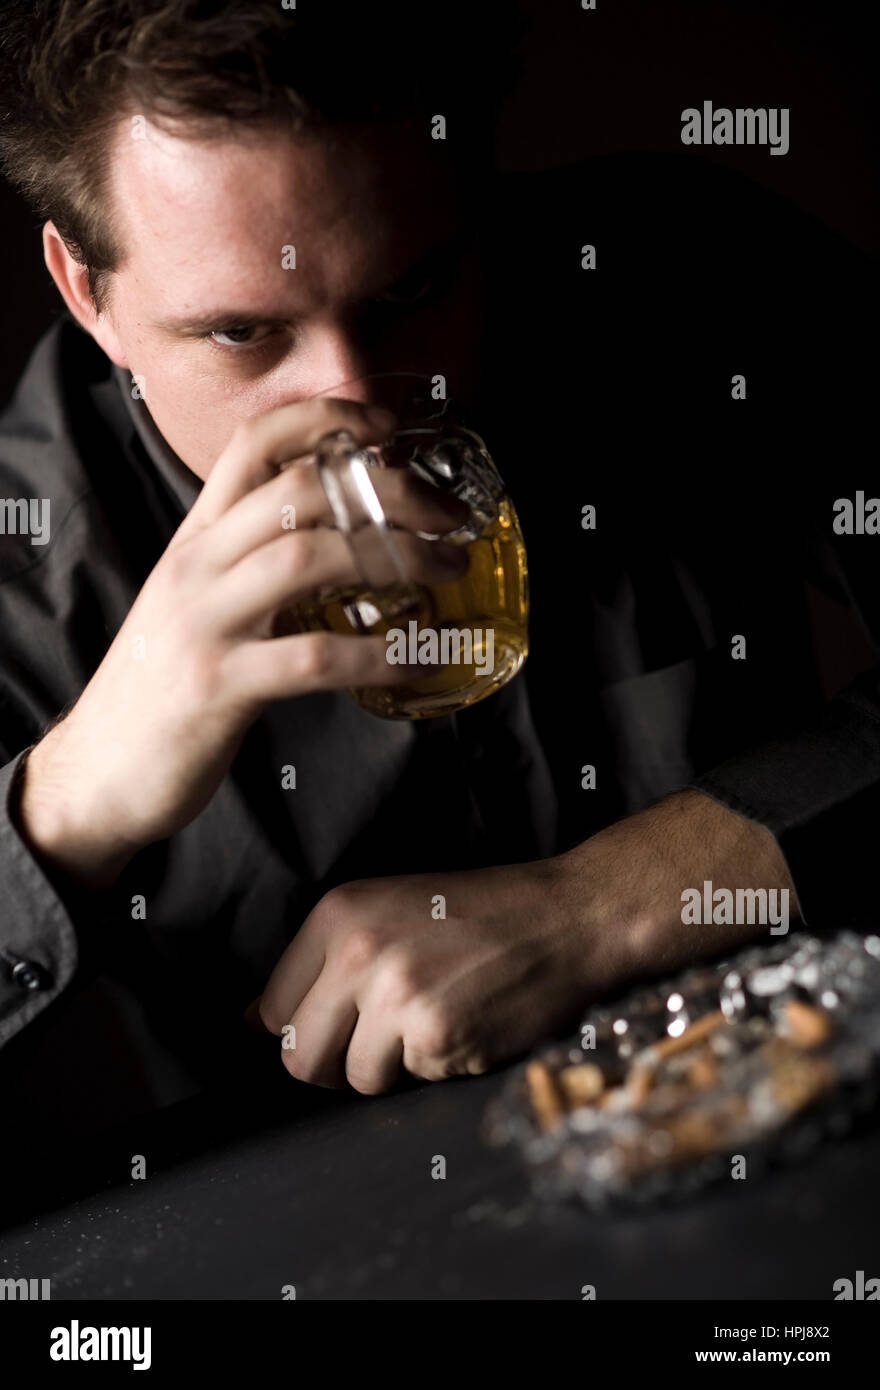 Modello rilasciato , Mann trinkt Bier - uomo bevande birra Foto Stock